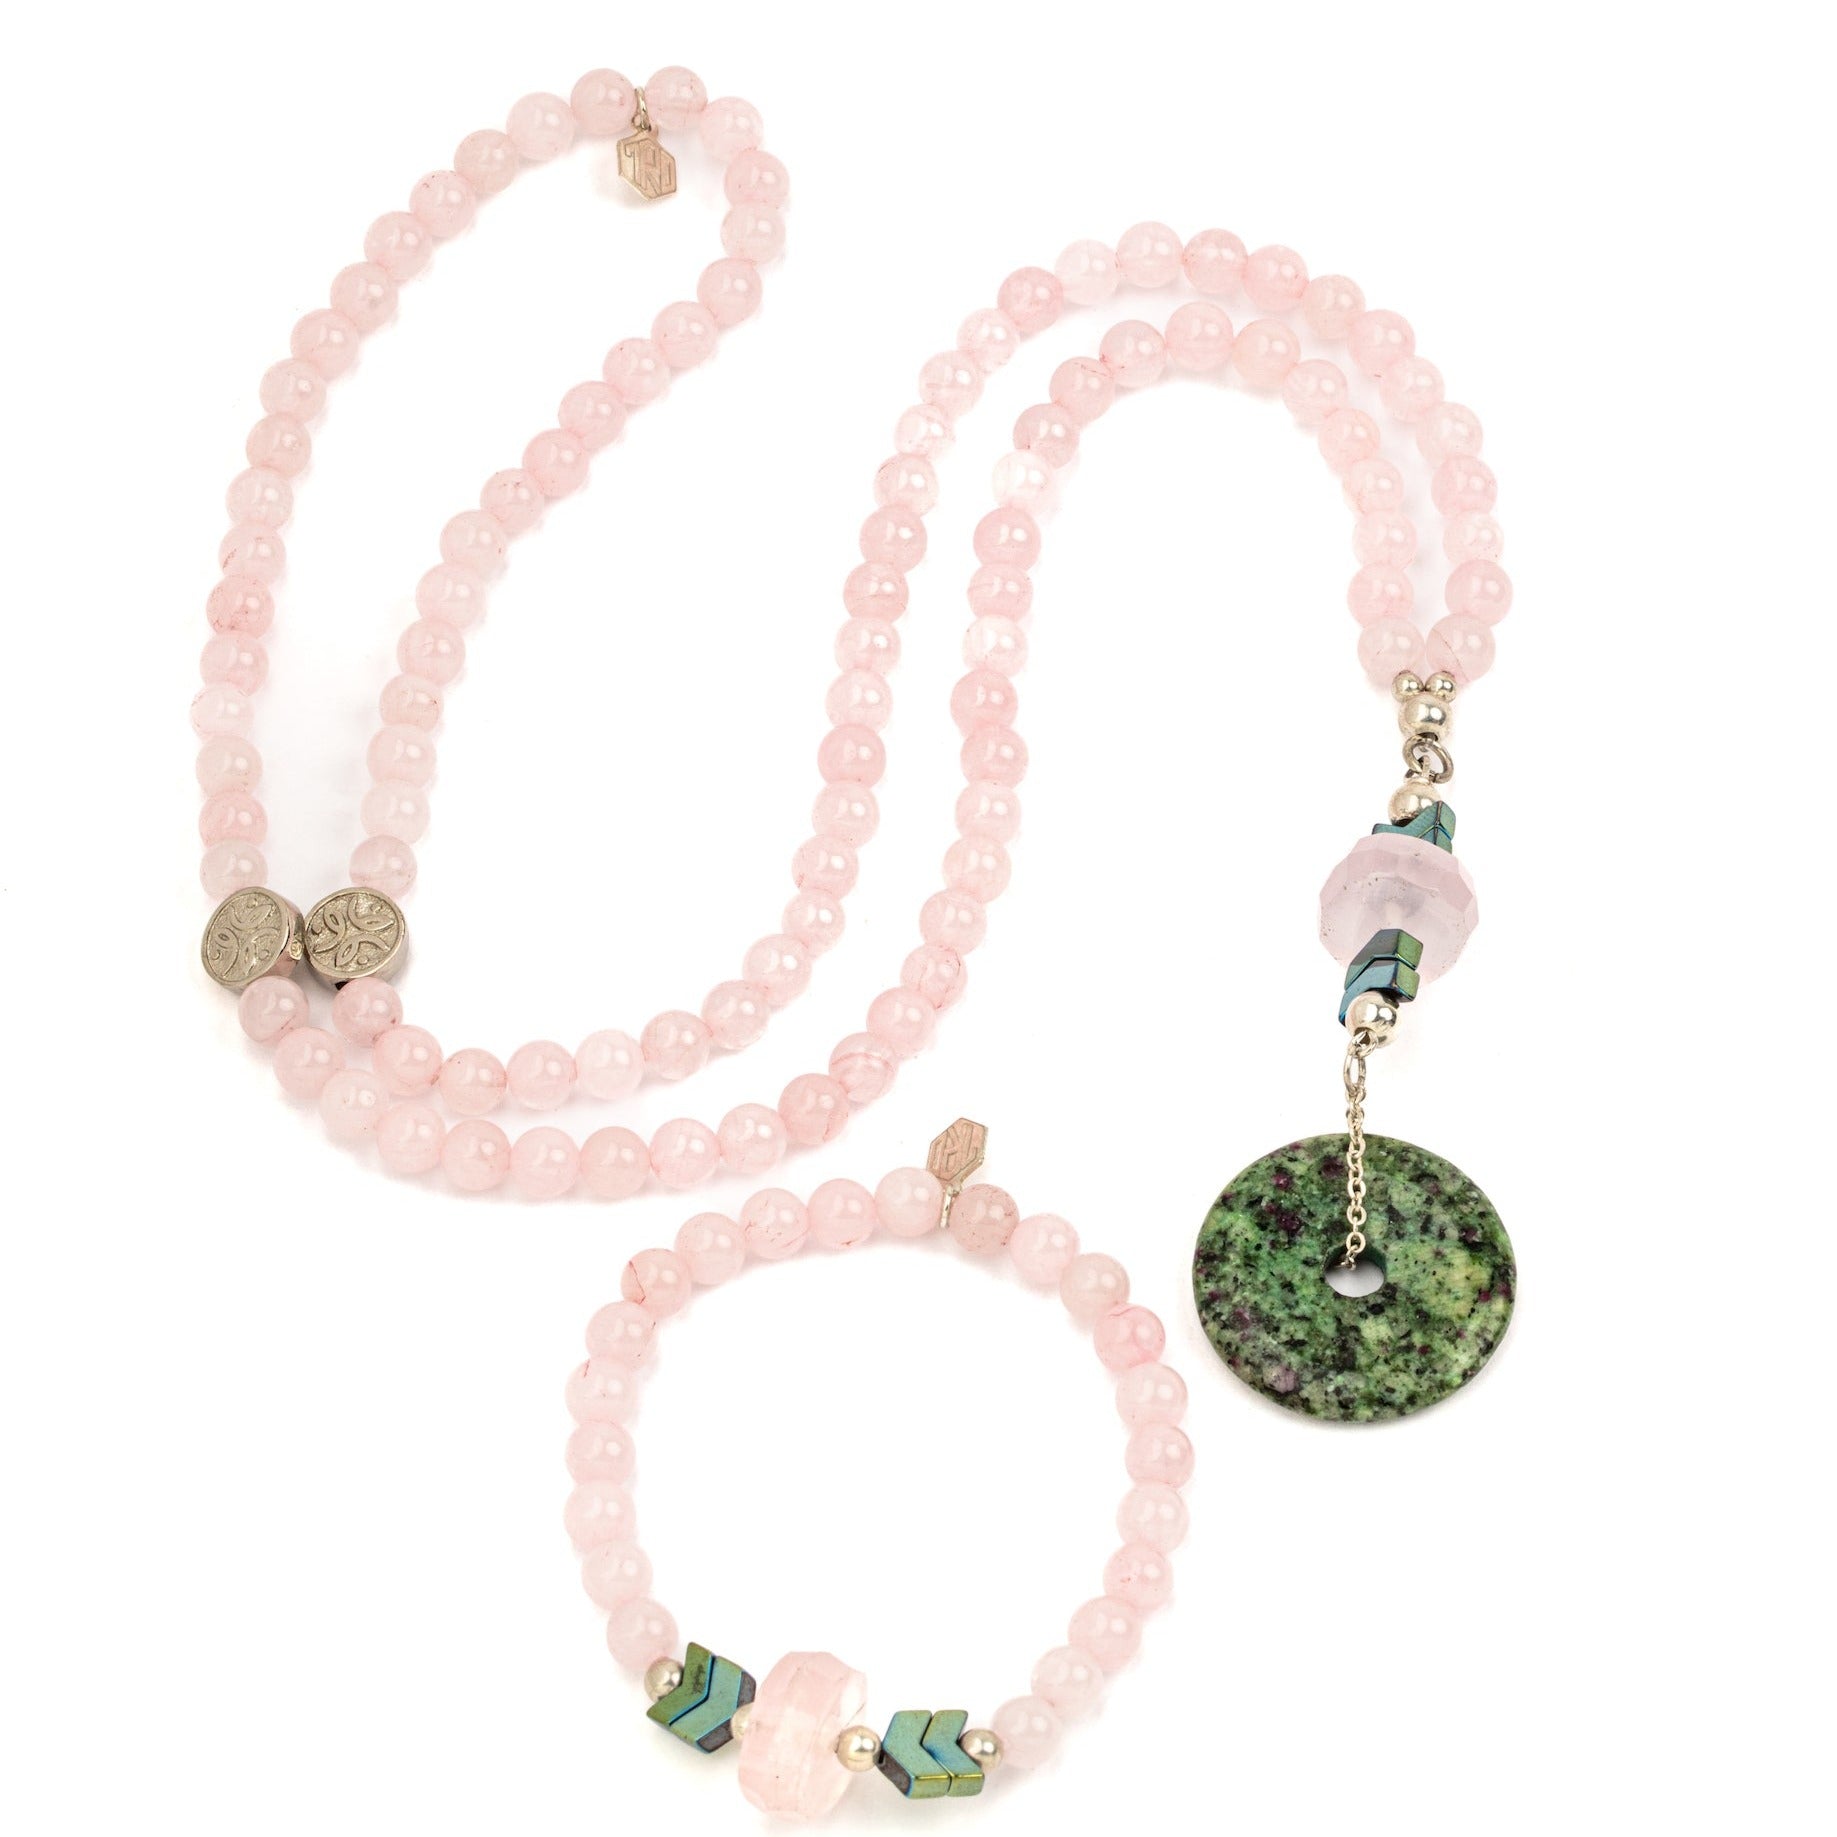 rose quartz with jade necklace and bracelet